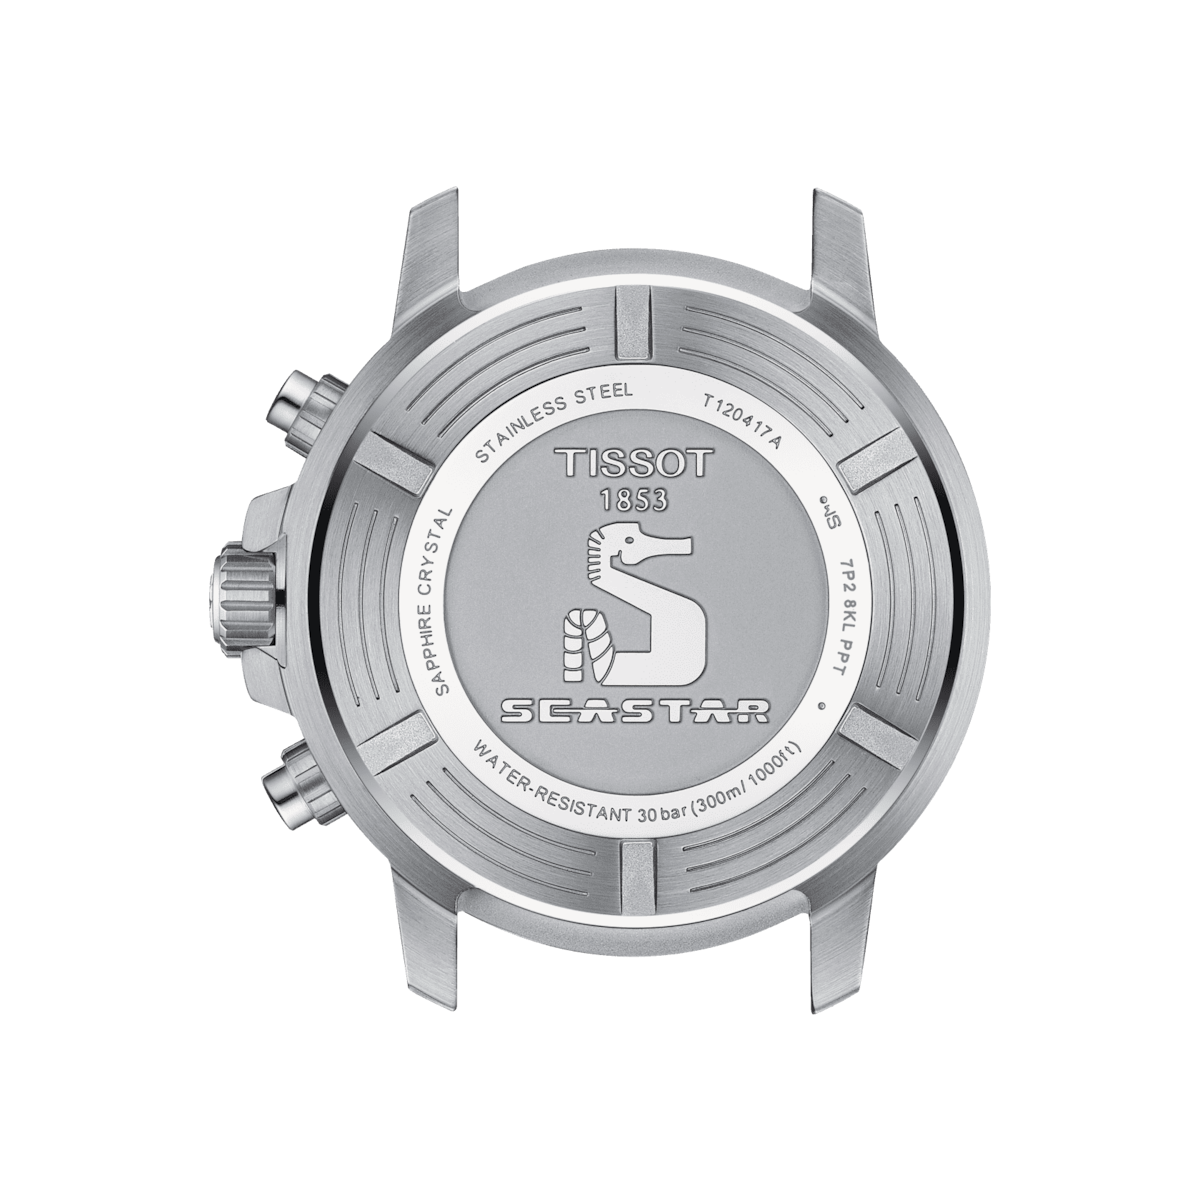 Tissot Seastar 1000 Chronograph Grey Dial 45.5 MM SS Watch T120.417.17.081.01